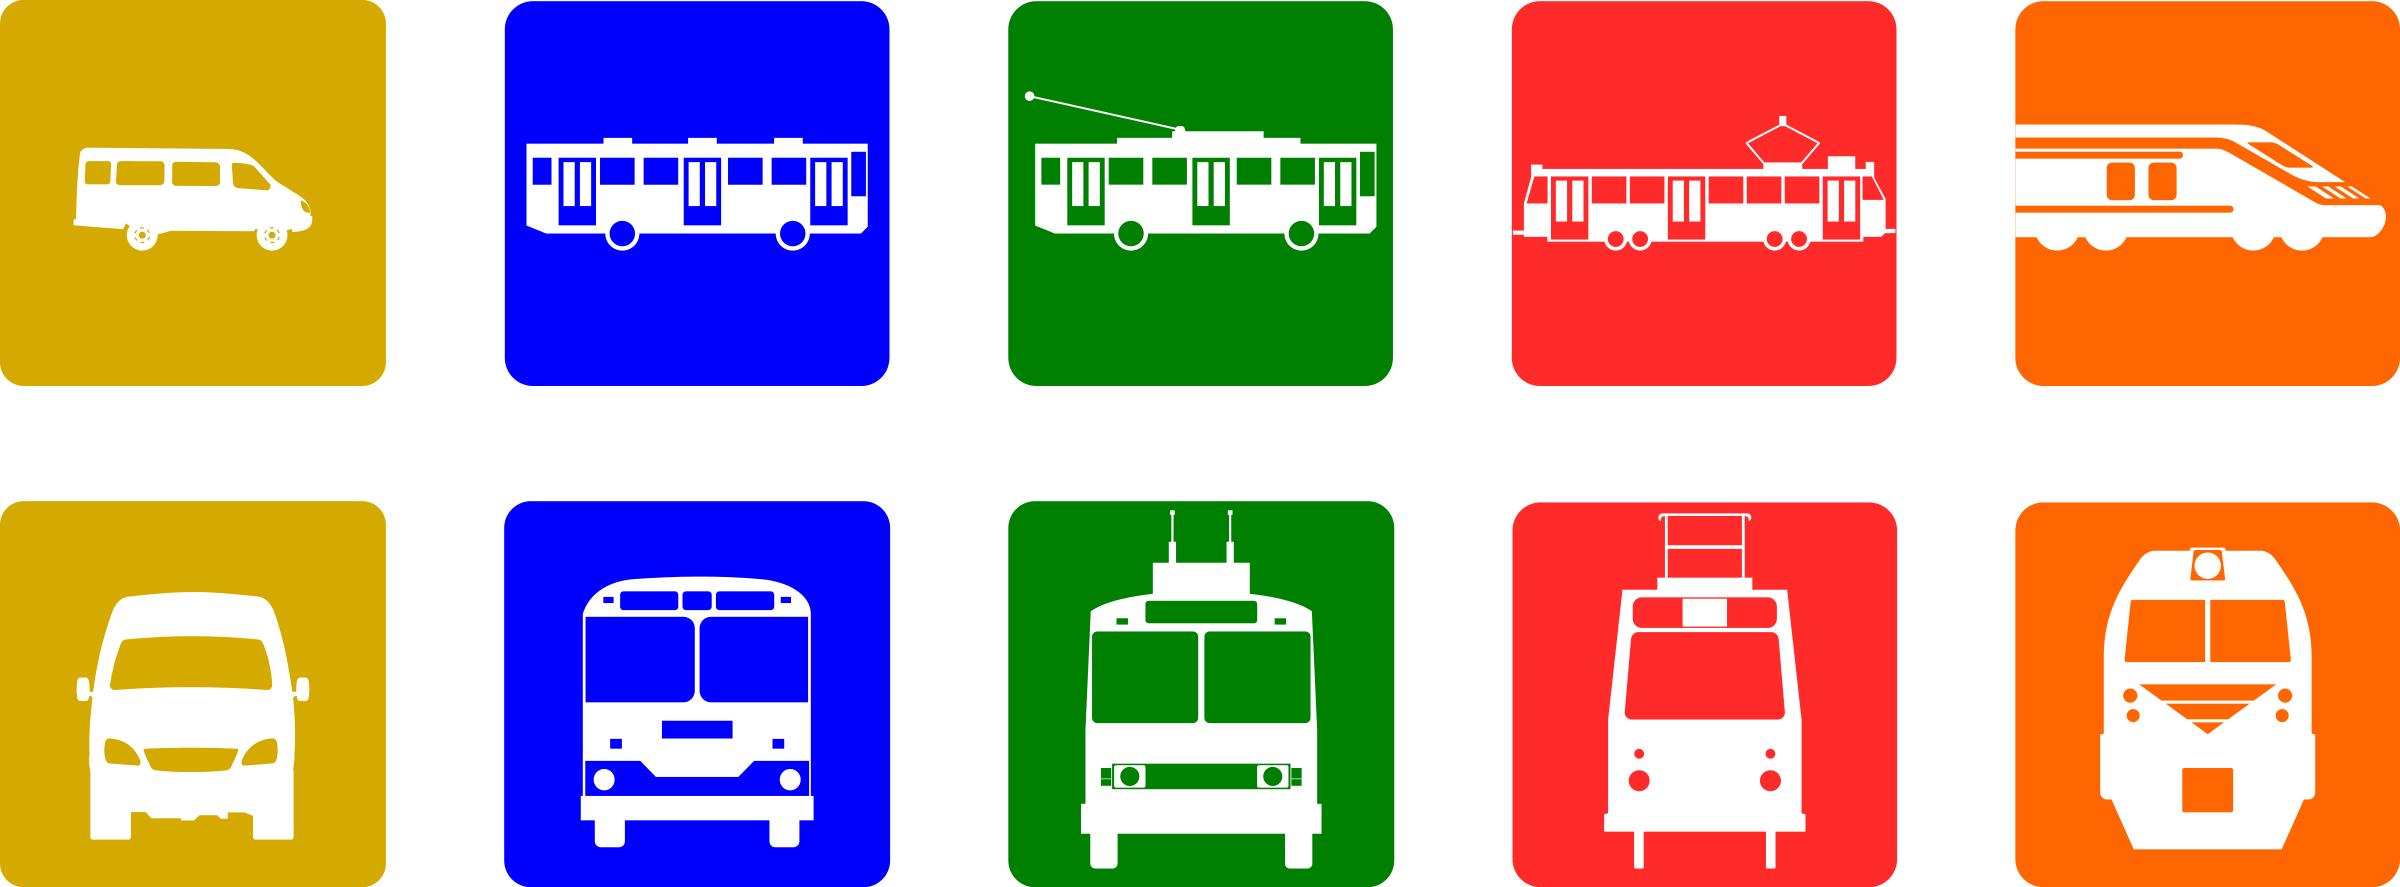 Public transport pictograms icons